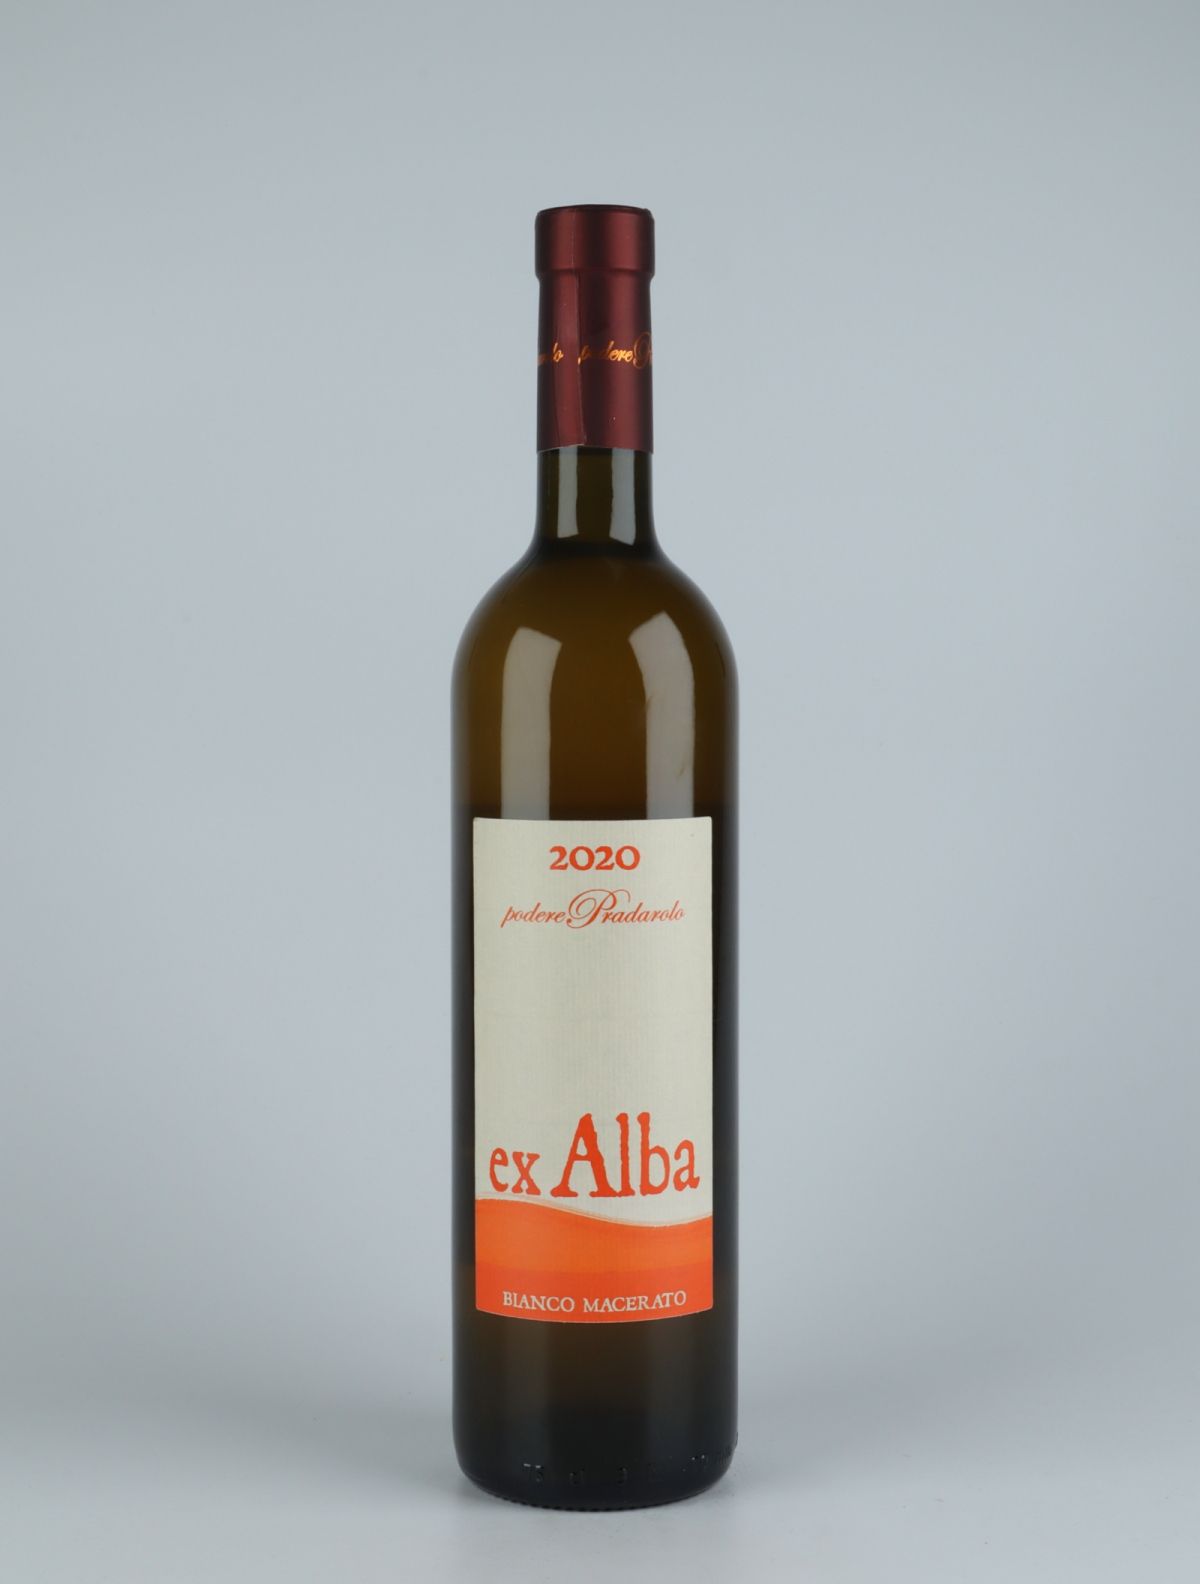 A bottle 2020 Ex Alba Orange wine from Podere Pradarolo, Emilia-Romagna in Italy